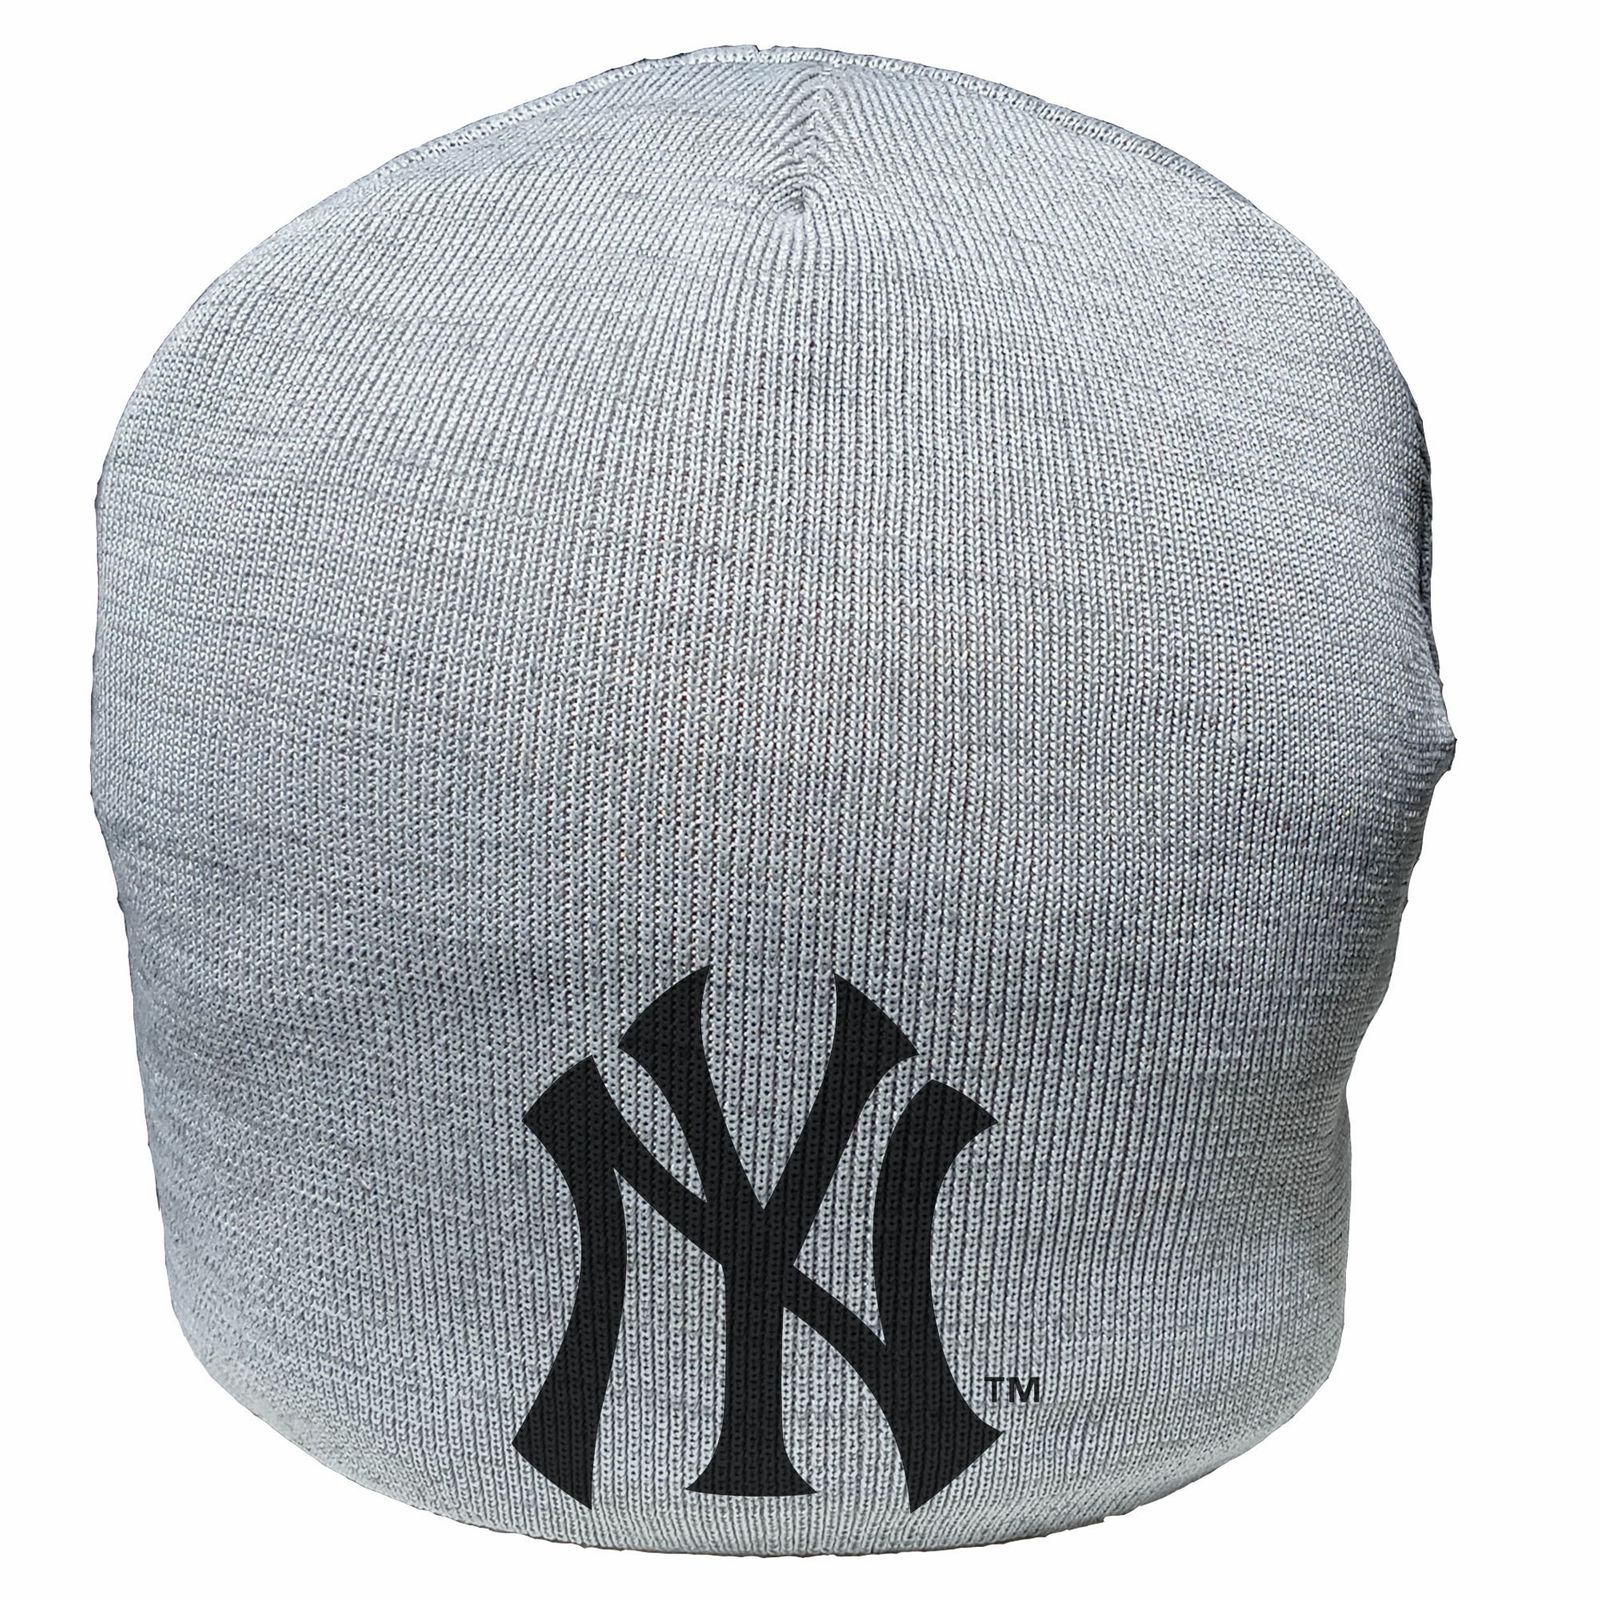 کلاه بافتنی آی تمر مدل نیویورک NY کد 105 -  - 2